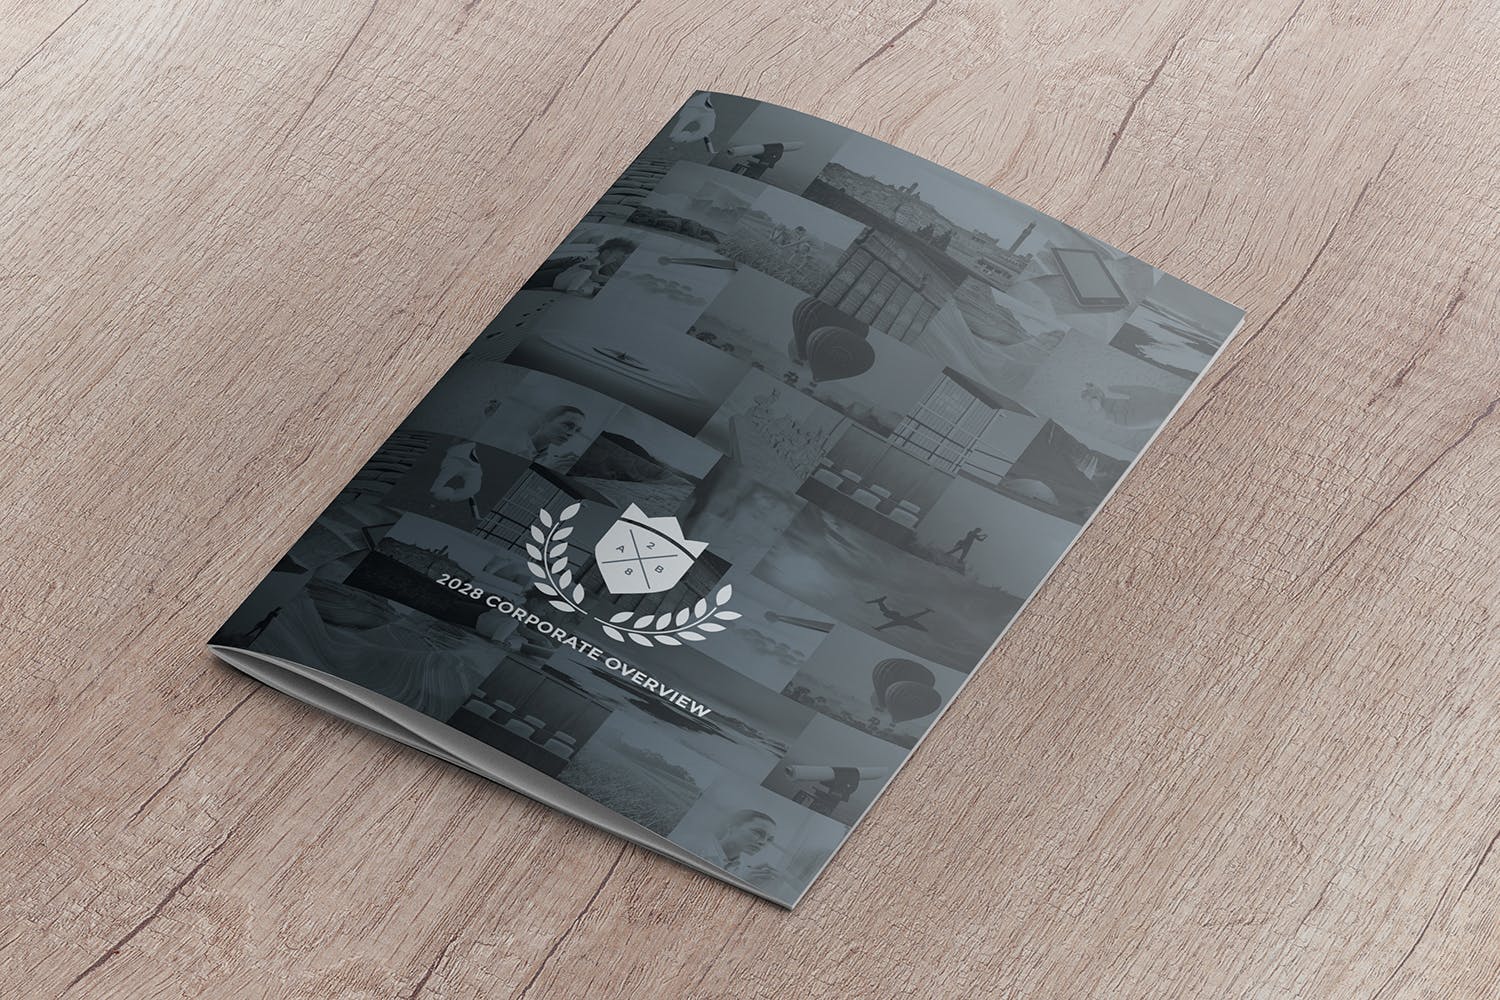 A4尺寸企业/品牌宣传册封面效果图样机16设计网精选模板 A4 Brochure Cover Mockup Perspective View插图(2)